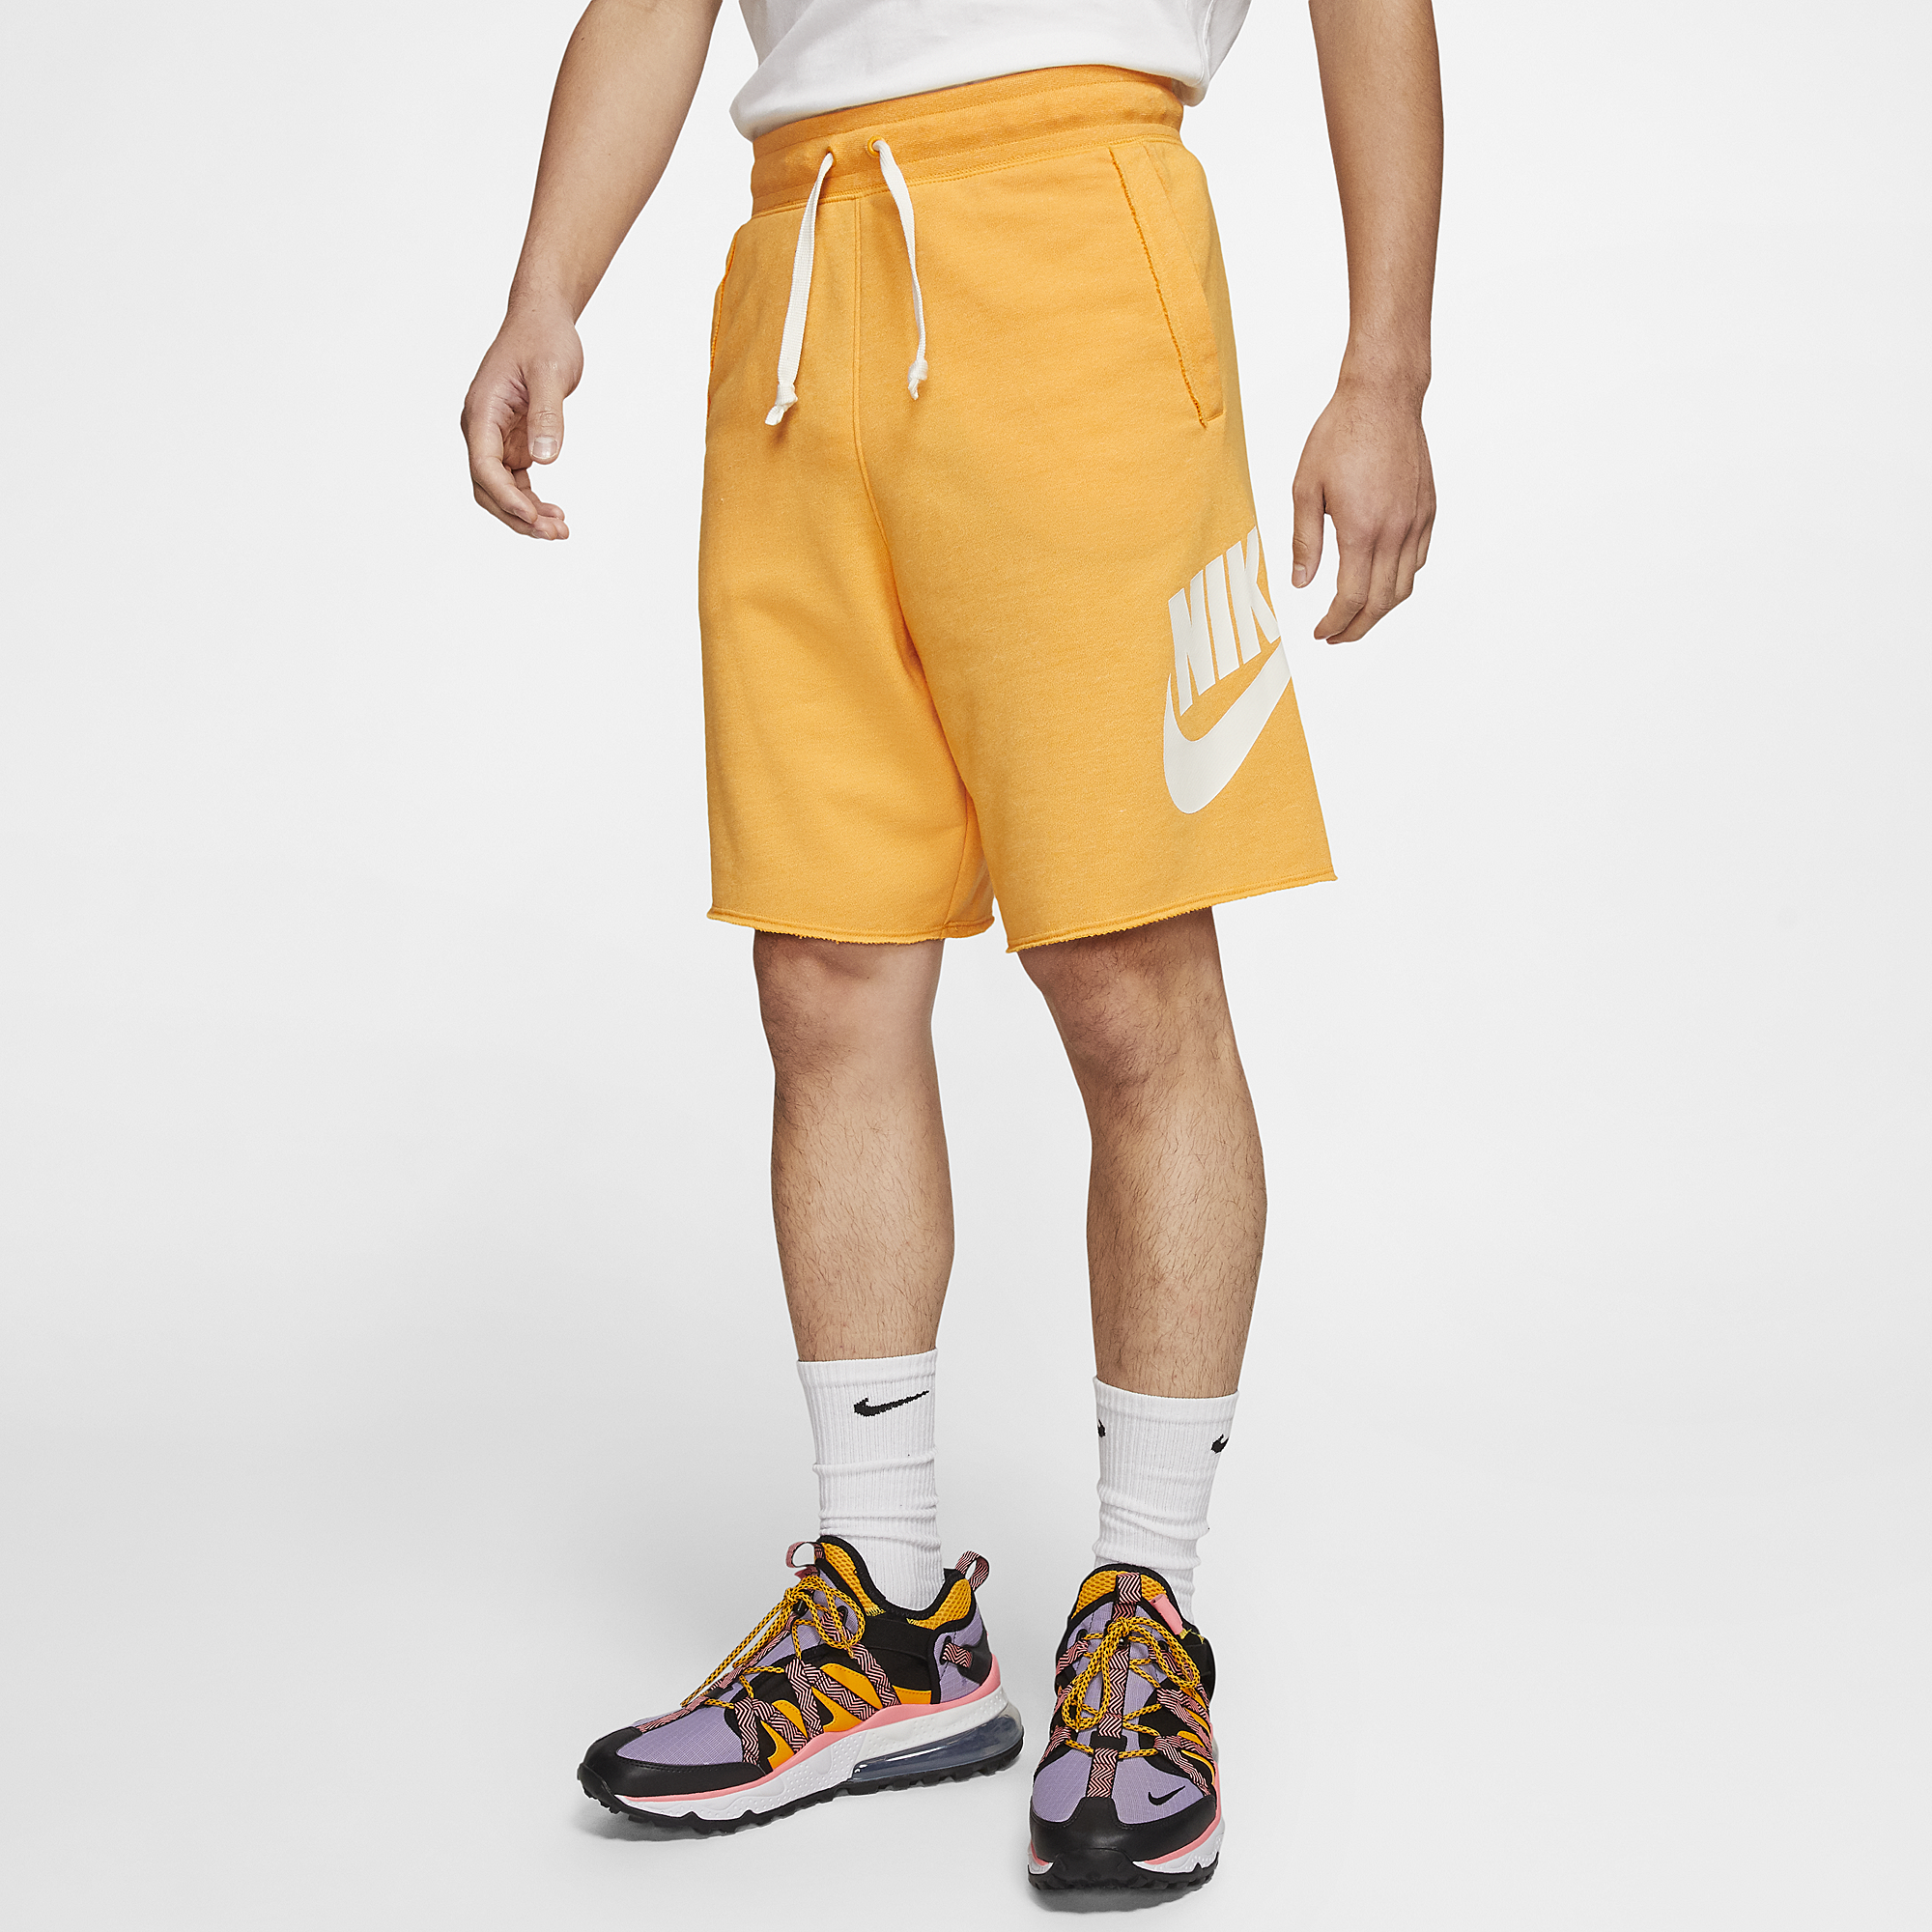 Nike LeBron 7 'MVP' | Foot Locker